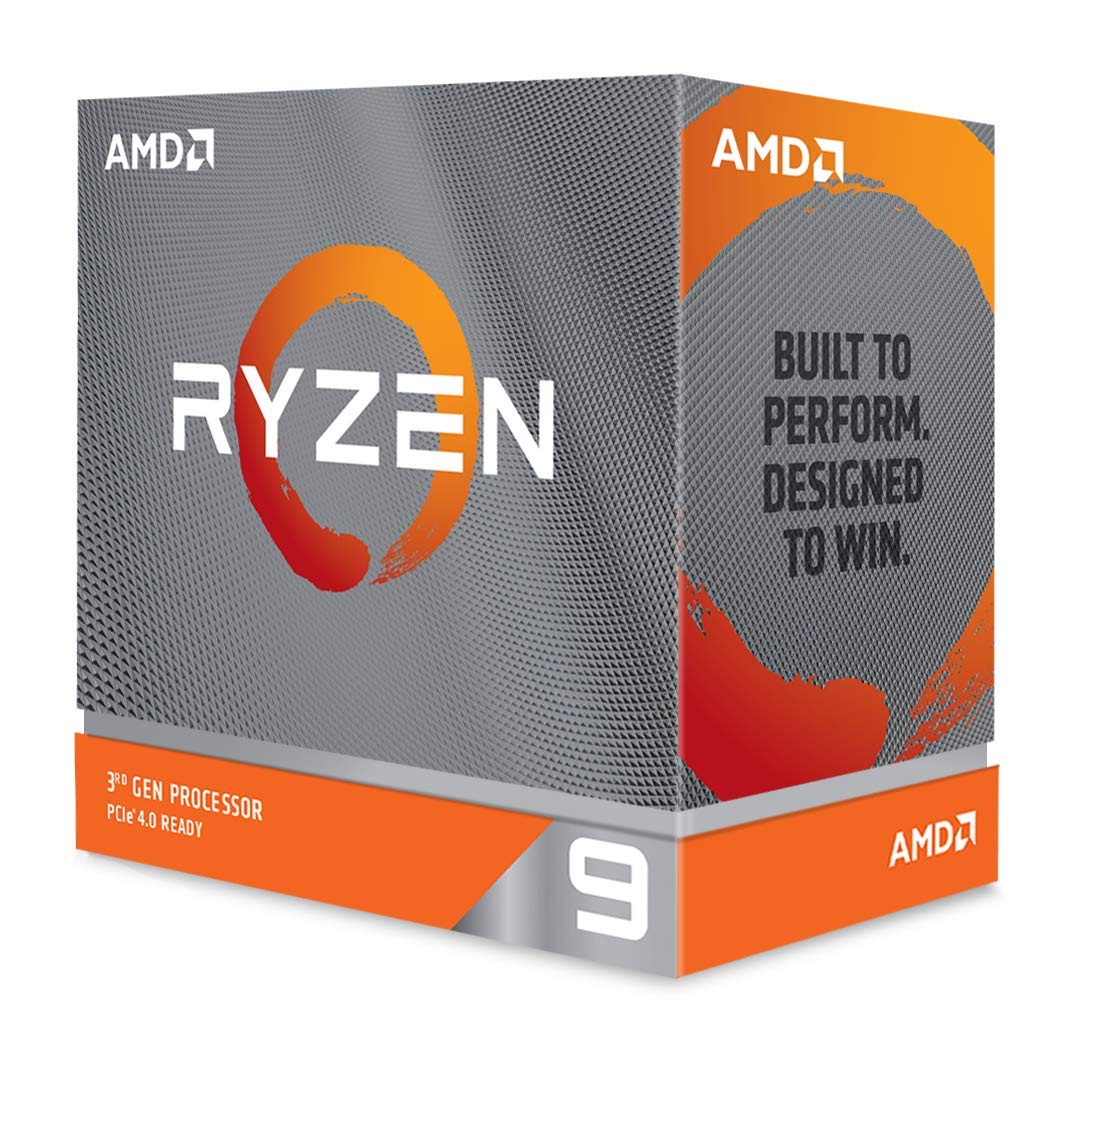 AMD Ryzen 9 3950X - 16 Core/32 Thread Desktop Processor for AM4 Socket with 64MB L3 Cache - No Integrated Graphics